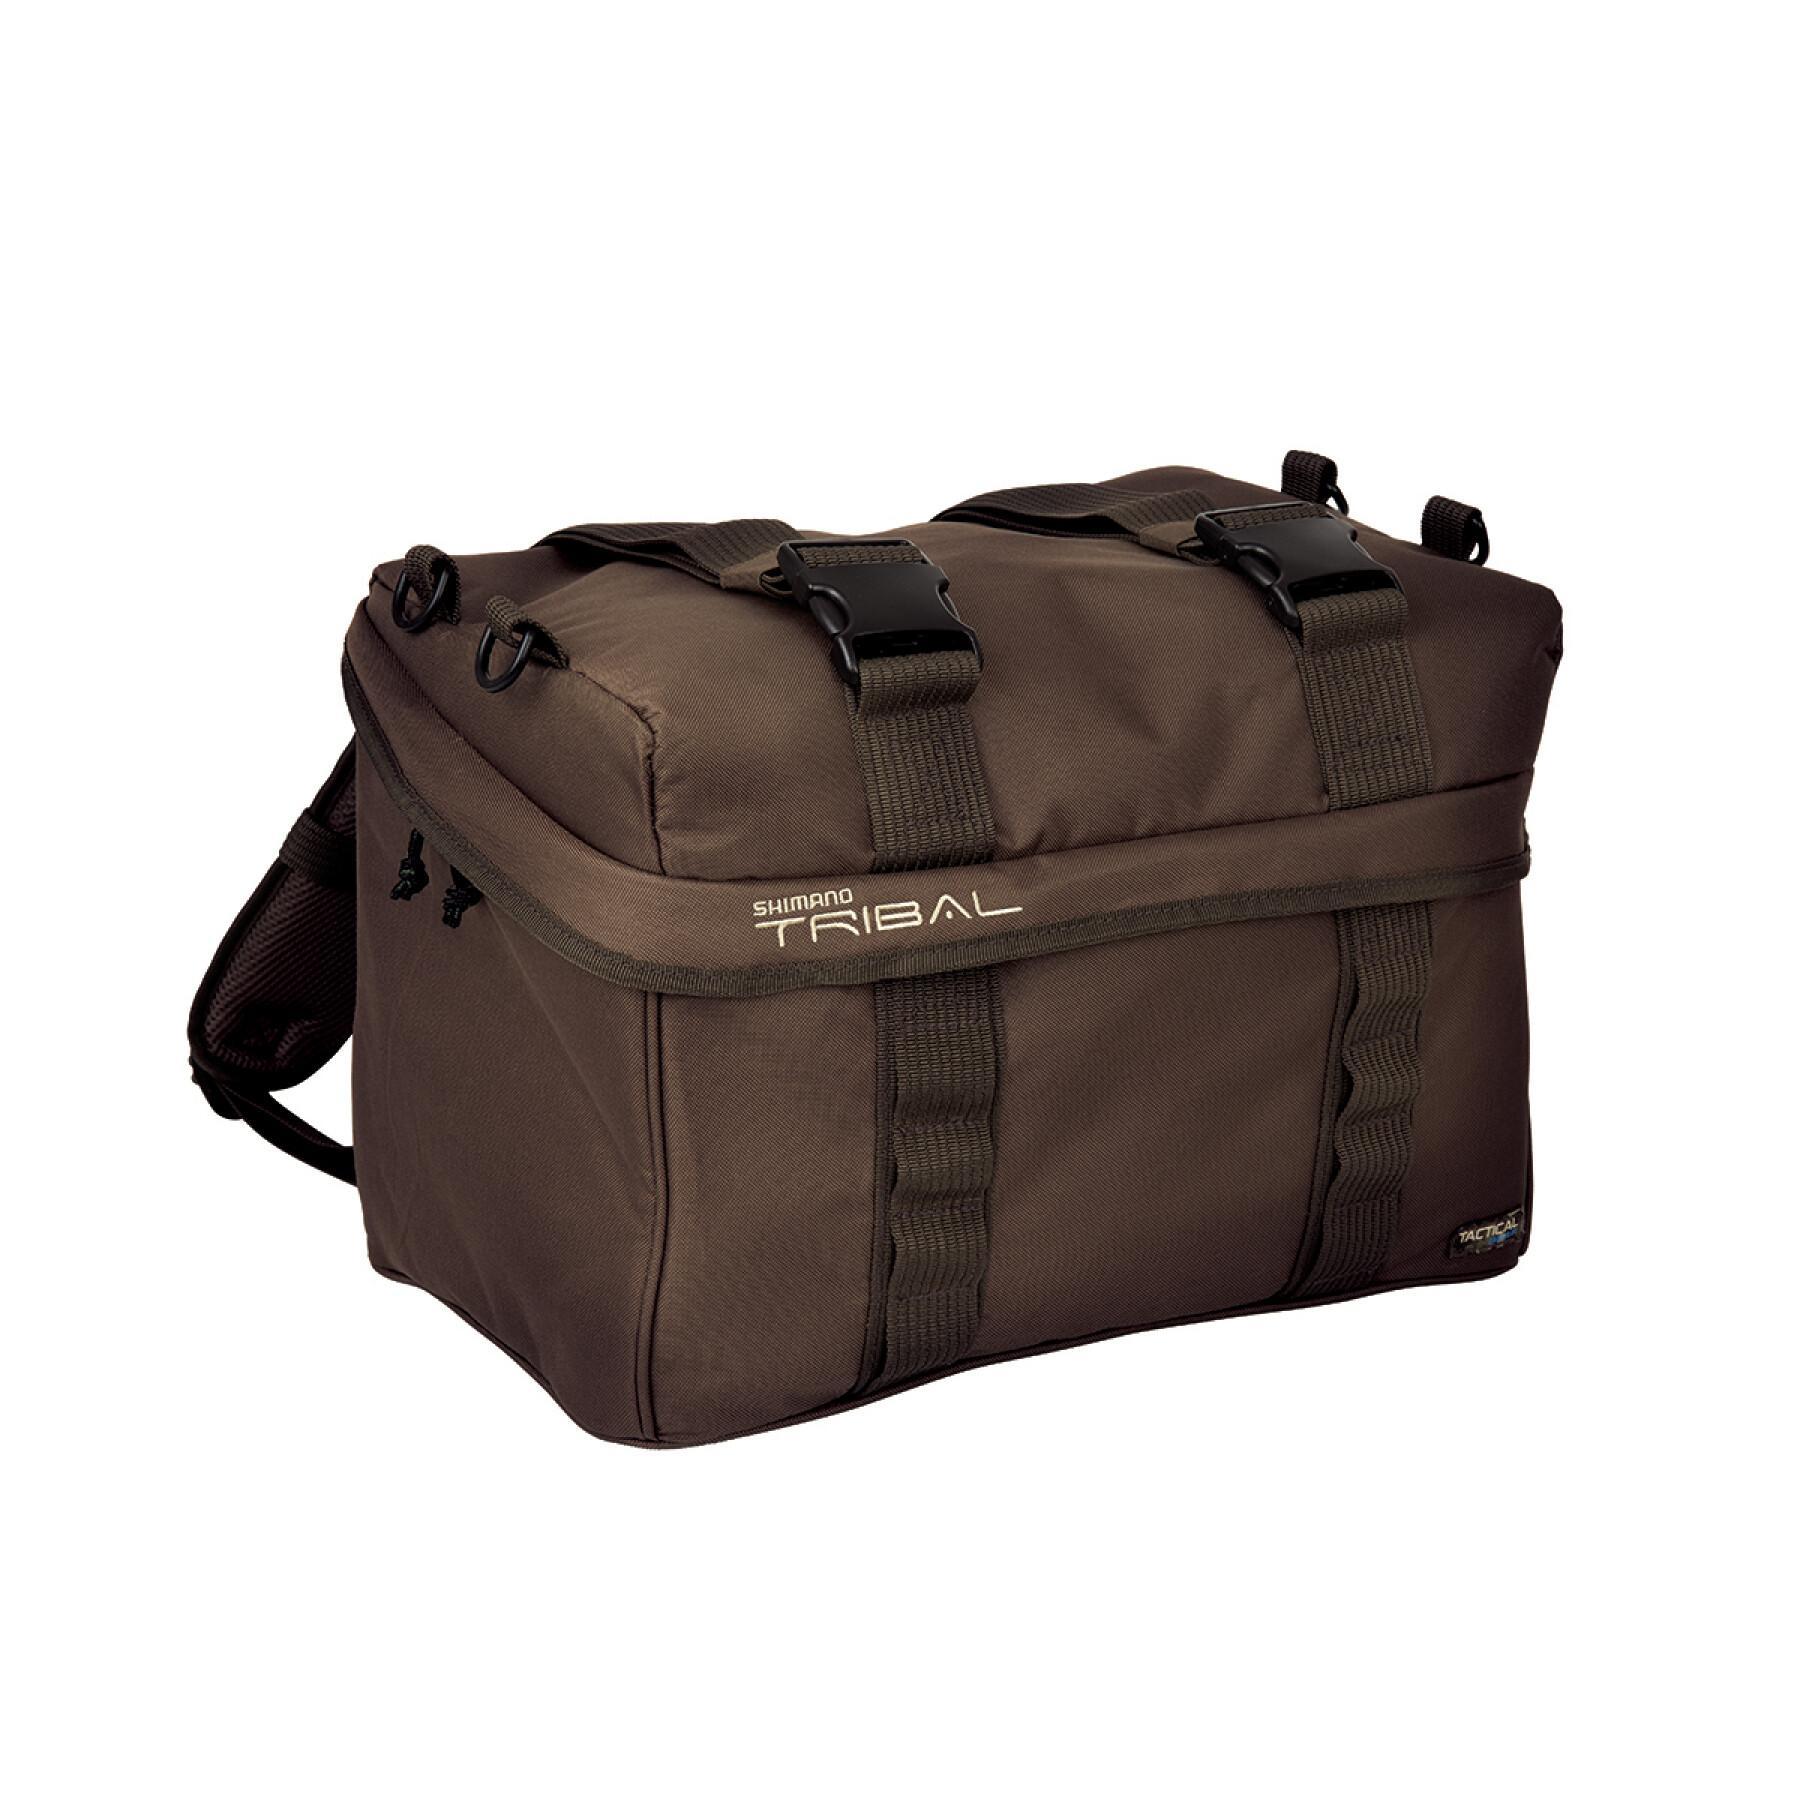 Backpack Shimano Tactical Carp compact